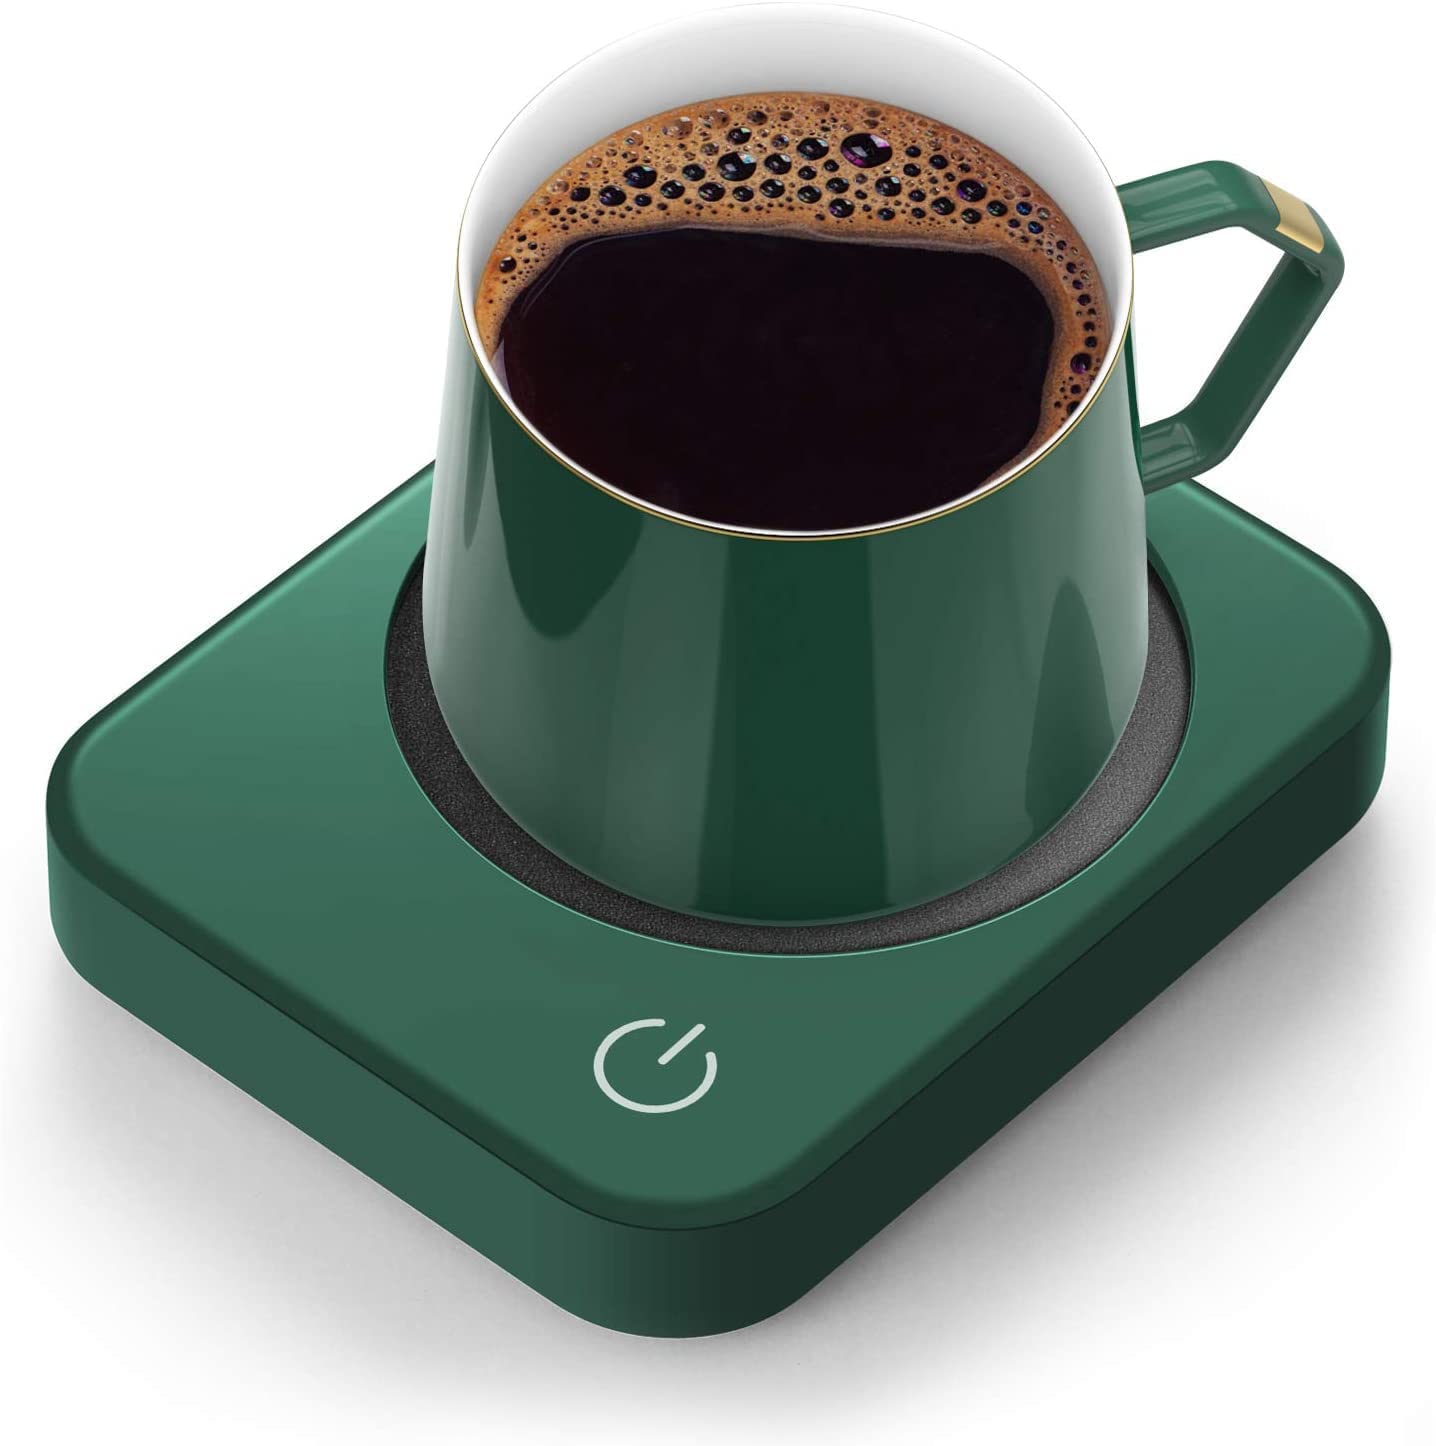 https://www.dontwasteyourmoney.com/wp-content/uploads/2020/05/anbanglin-electric-beverage-auto-shut-off-coffee-mug-warmer.jpg